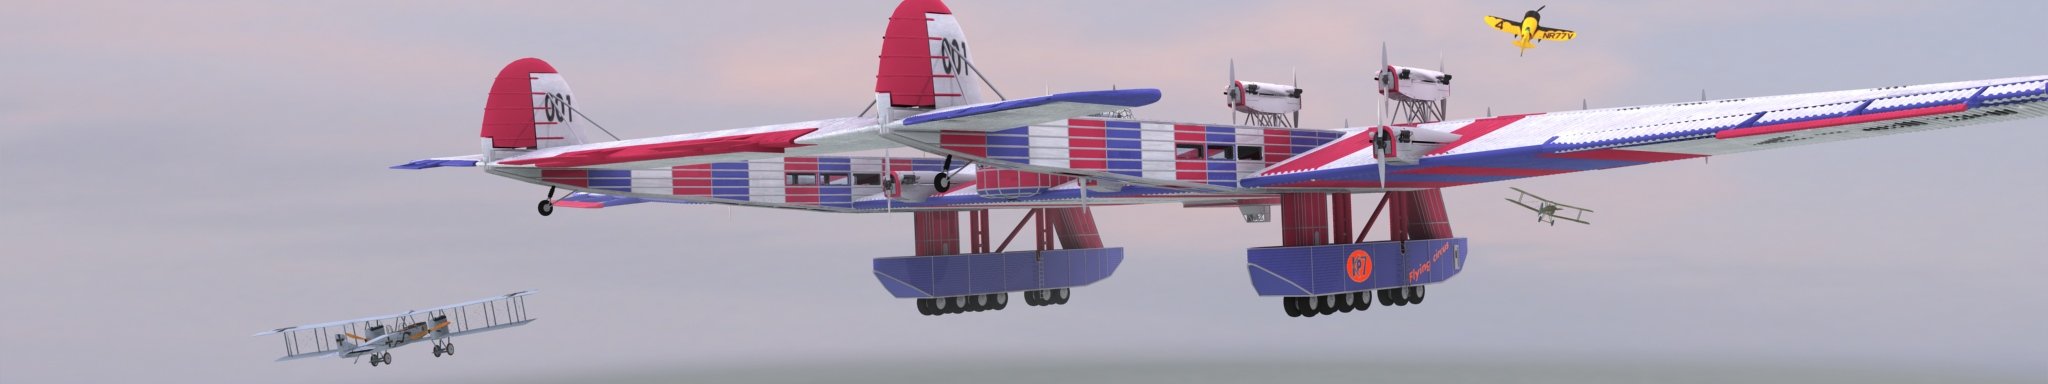 giant aircraft prototype